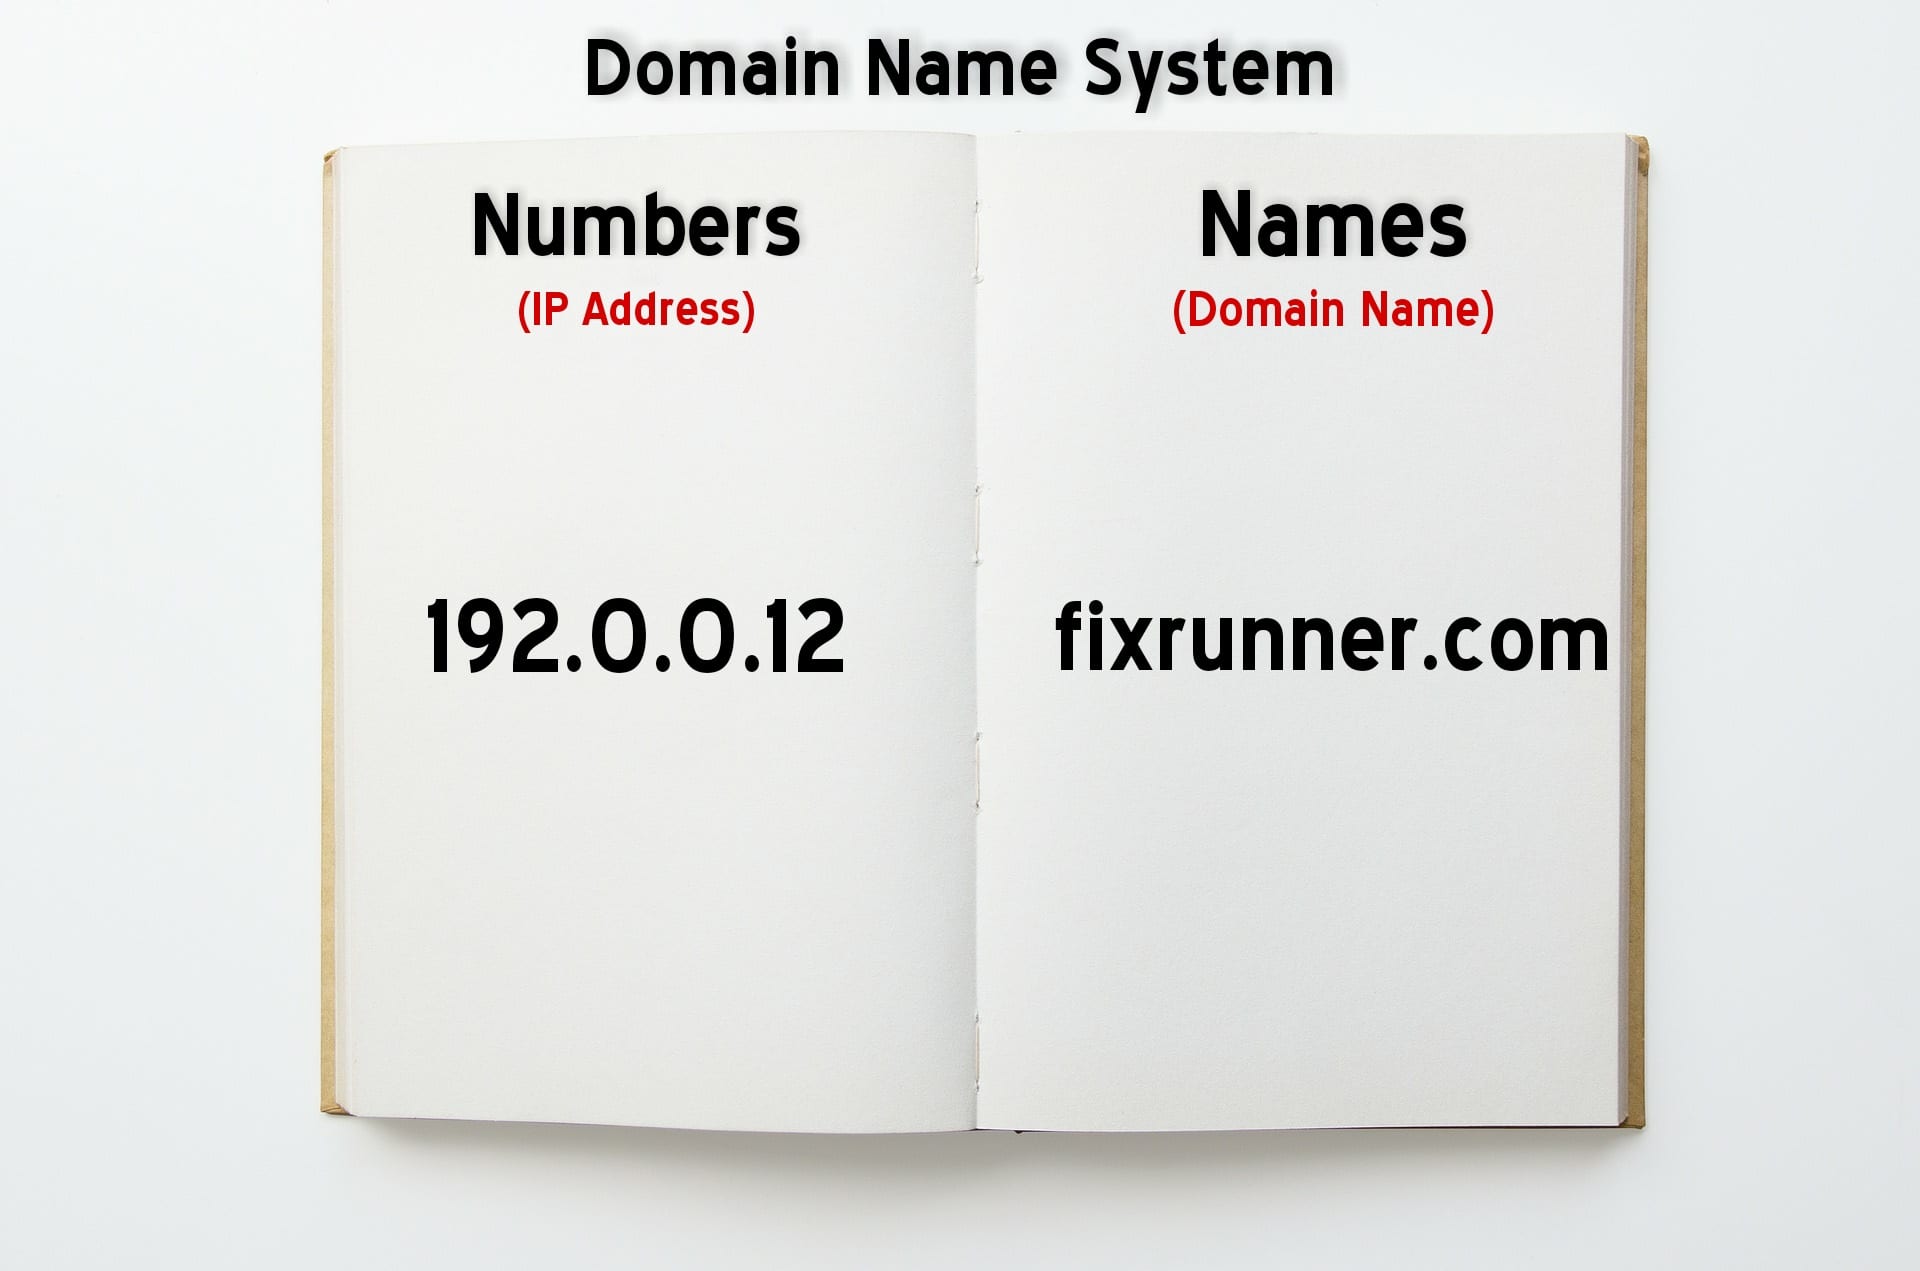 DNS similar to address book